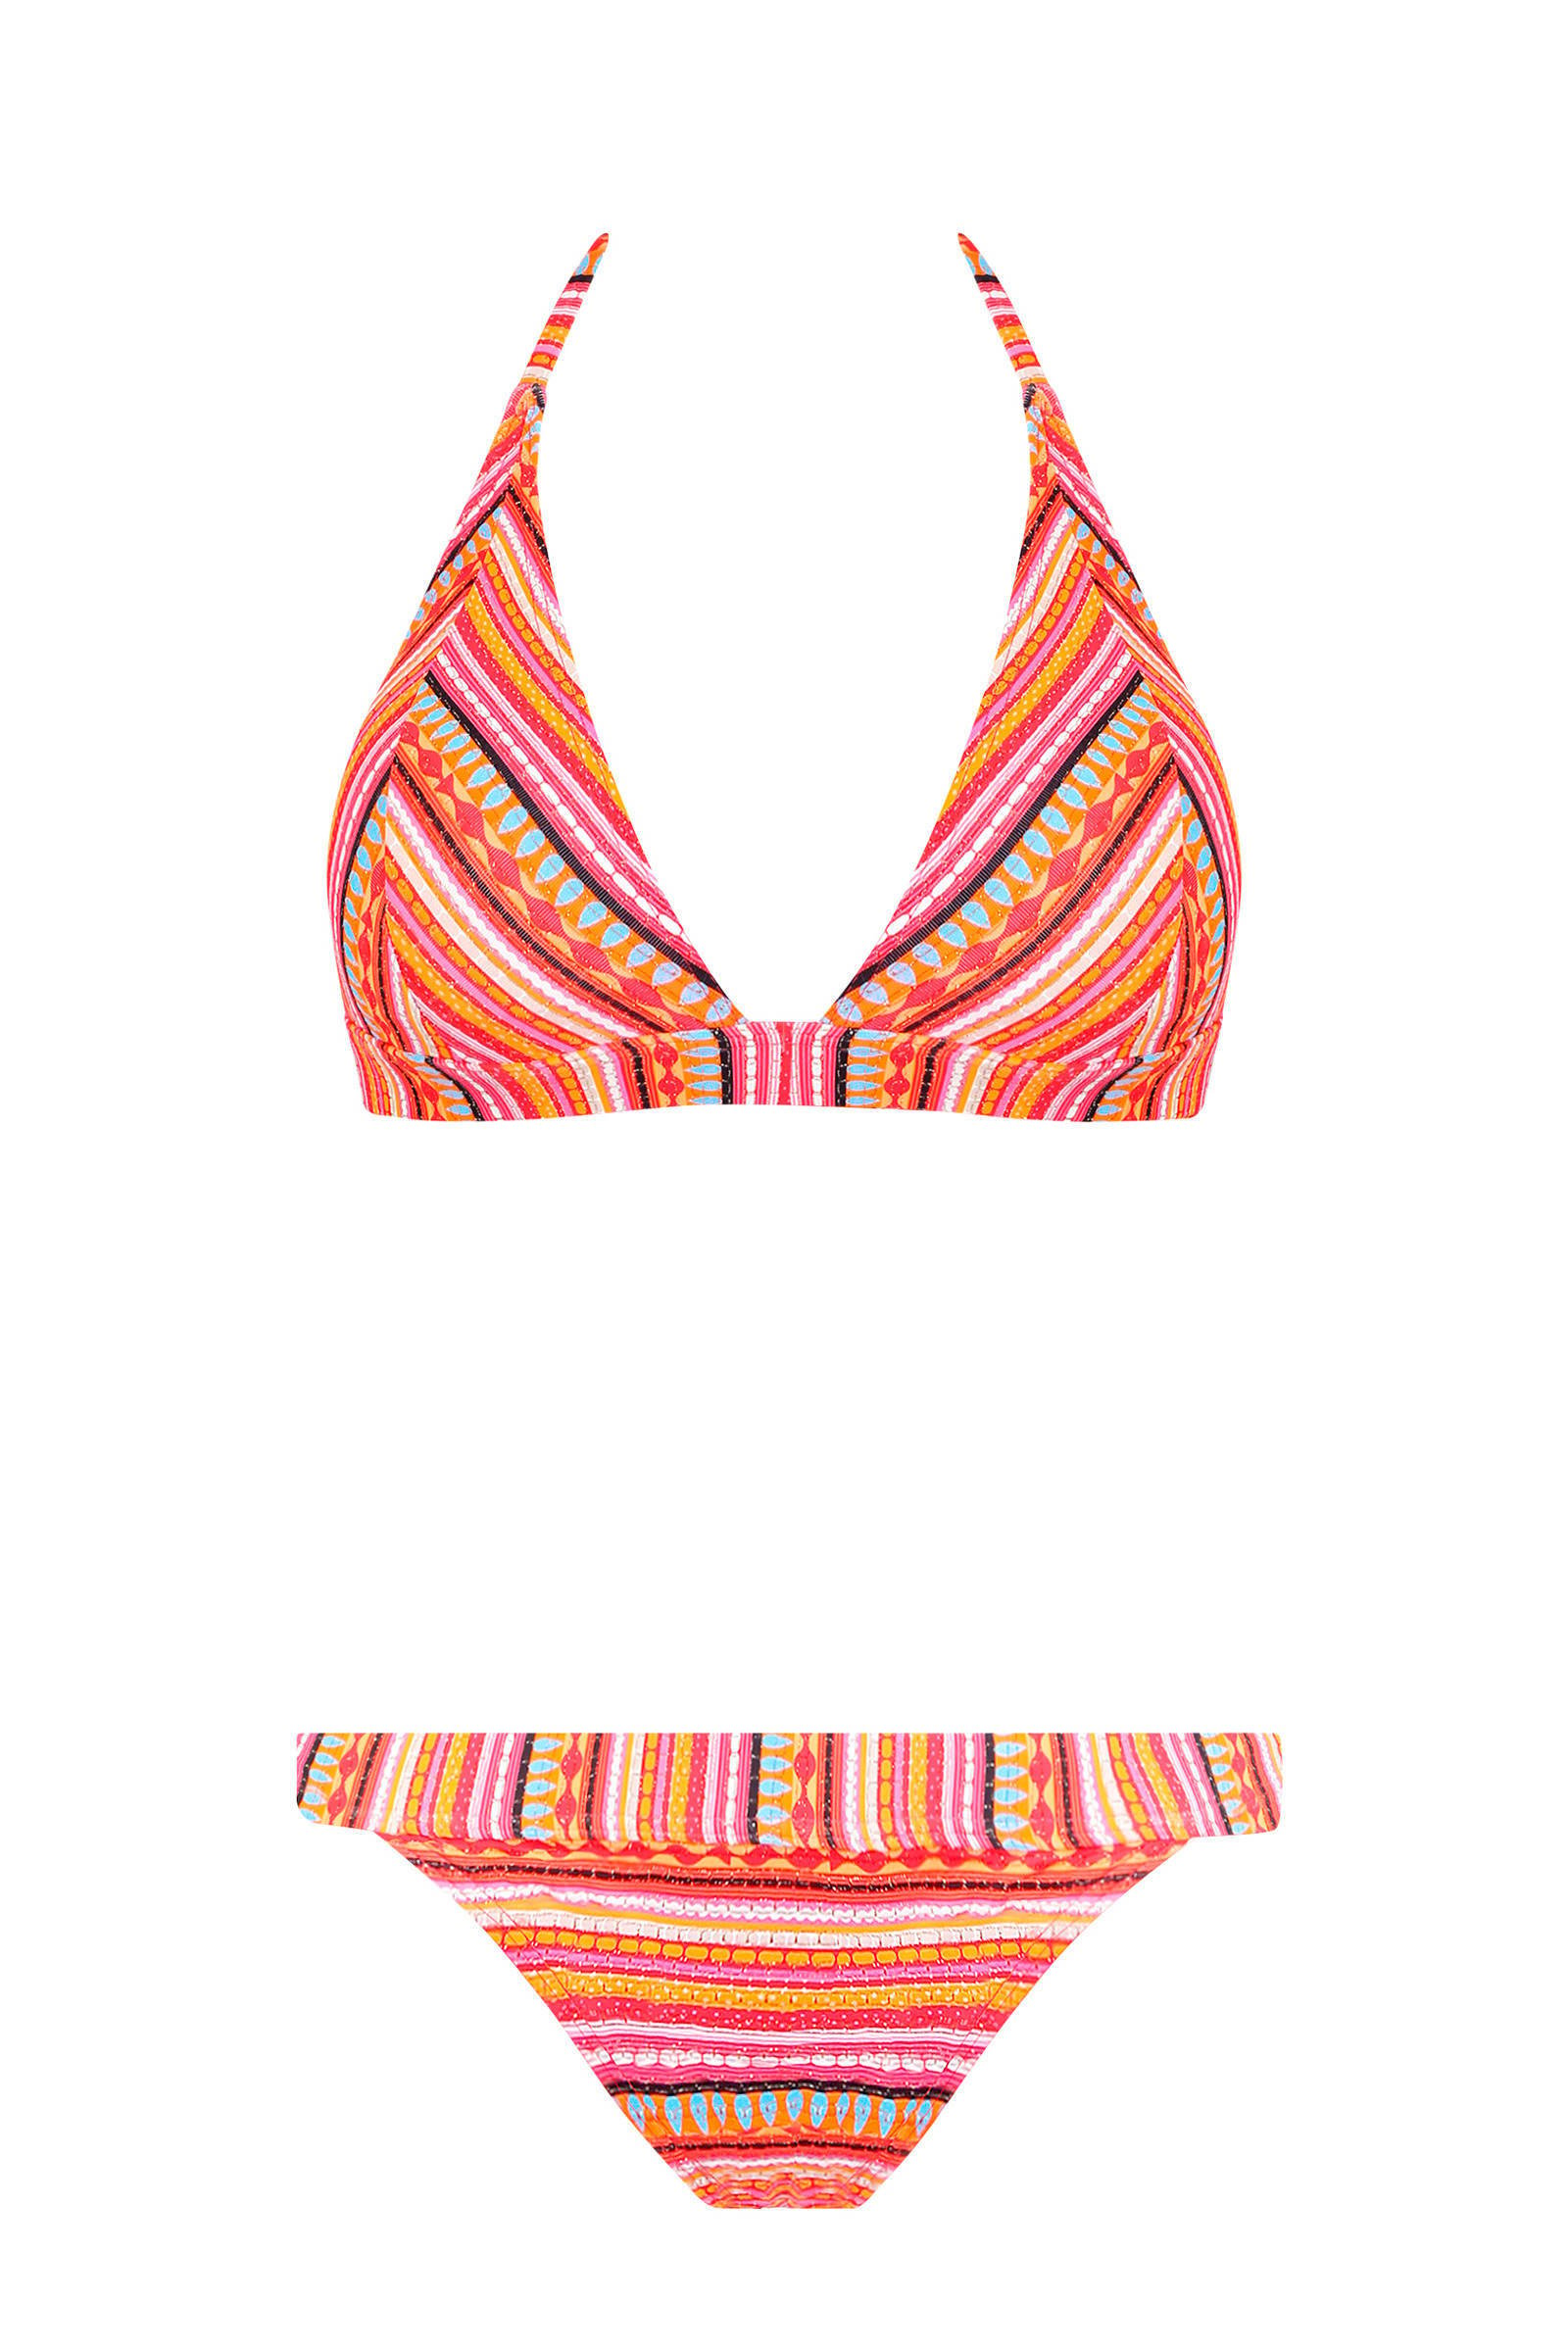 Lascana triangel bikini met all over print oranje roze geel